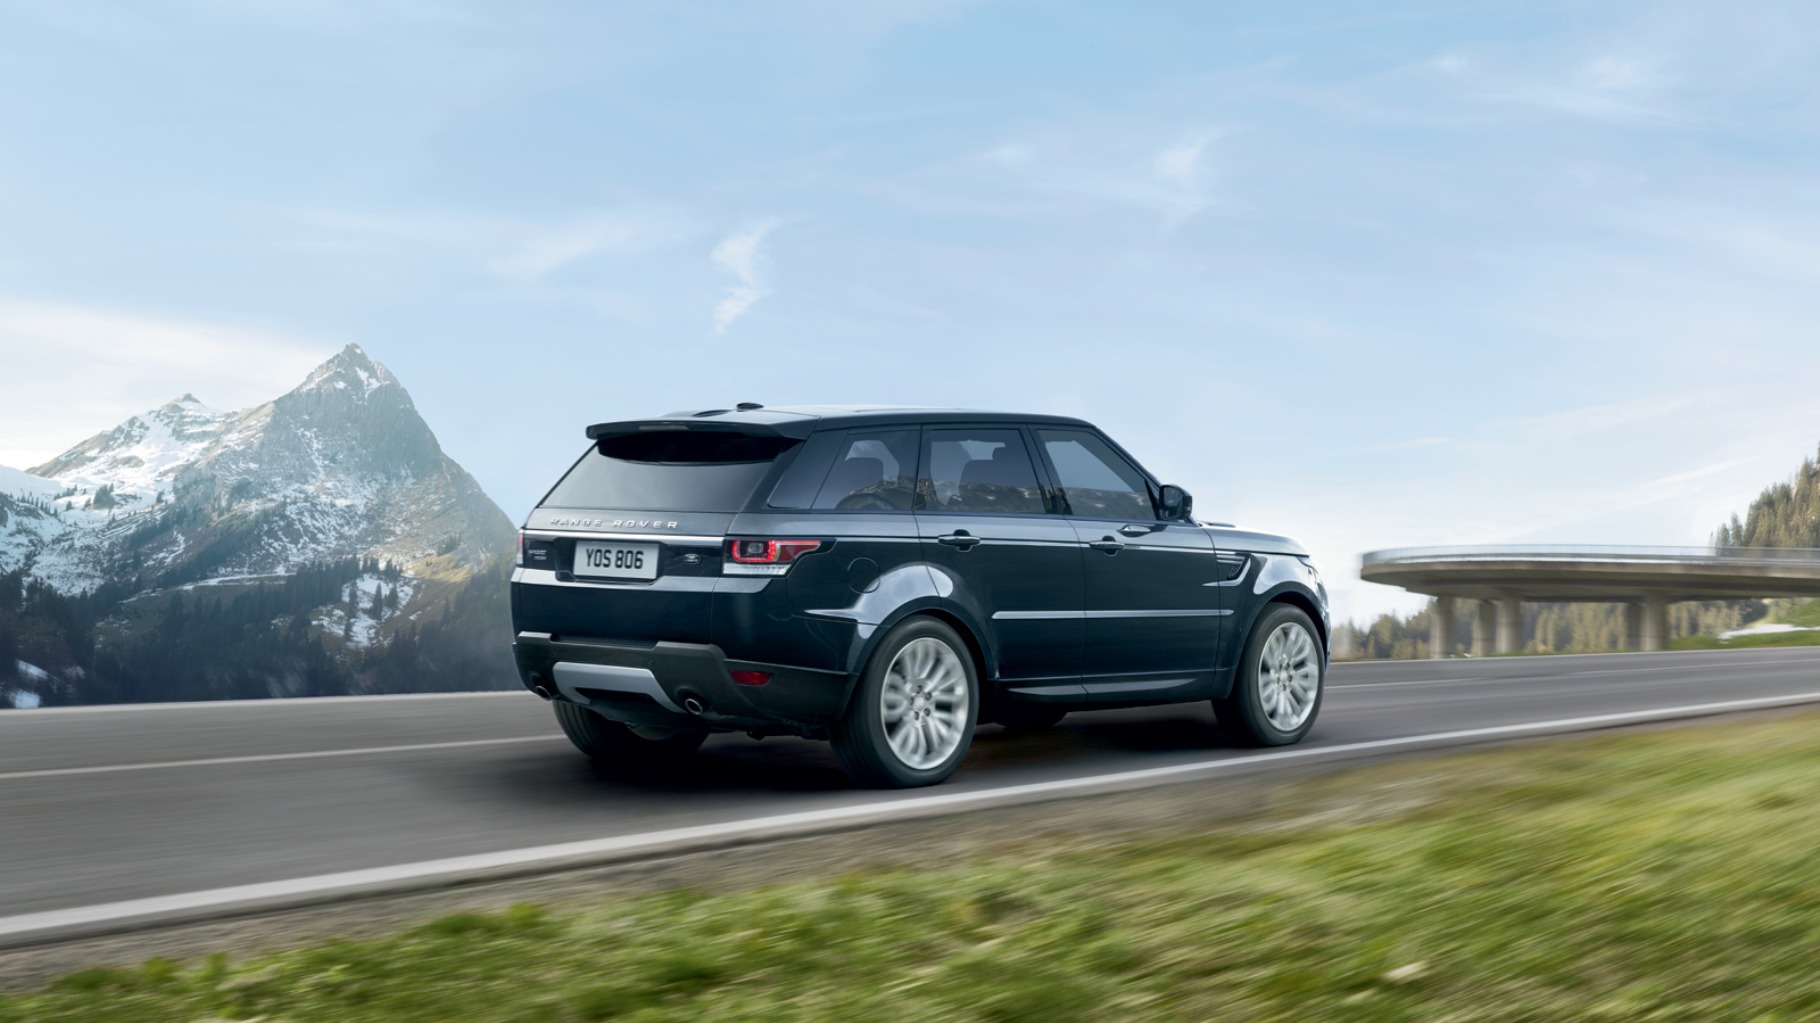 Range Rover Sport HSE 3.0 có giá khoảng 65.000 bảng Anh